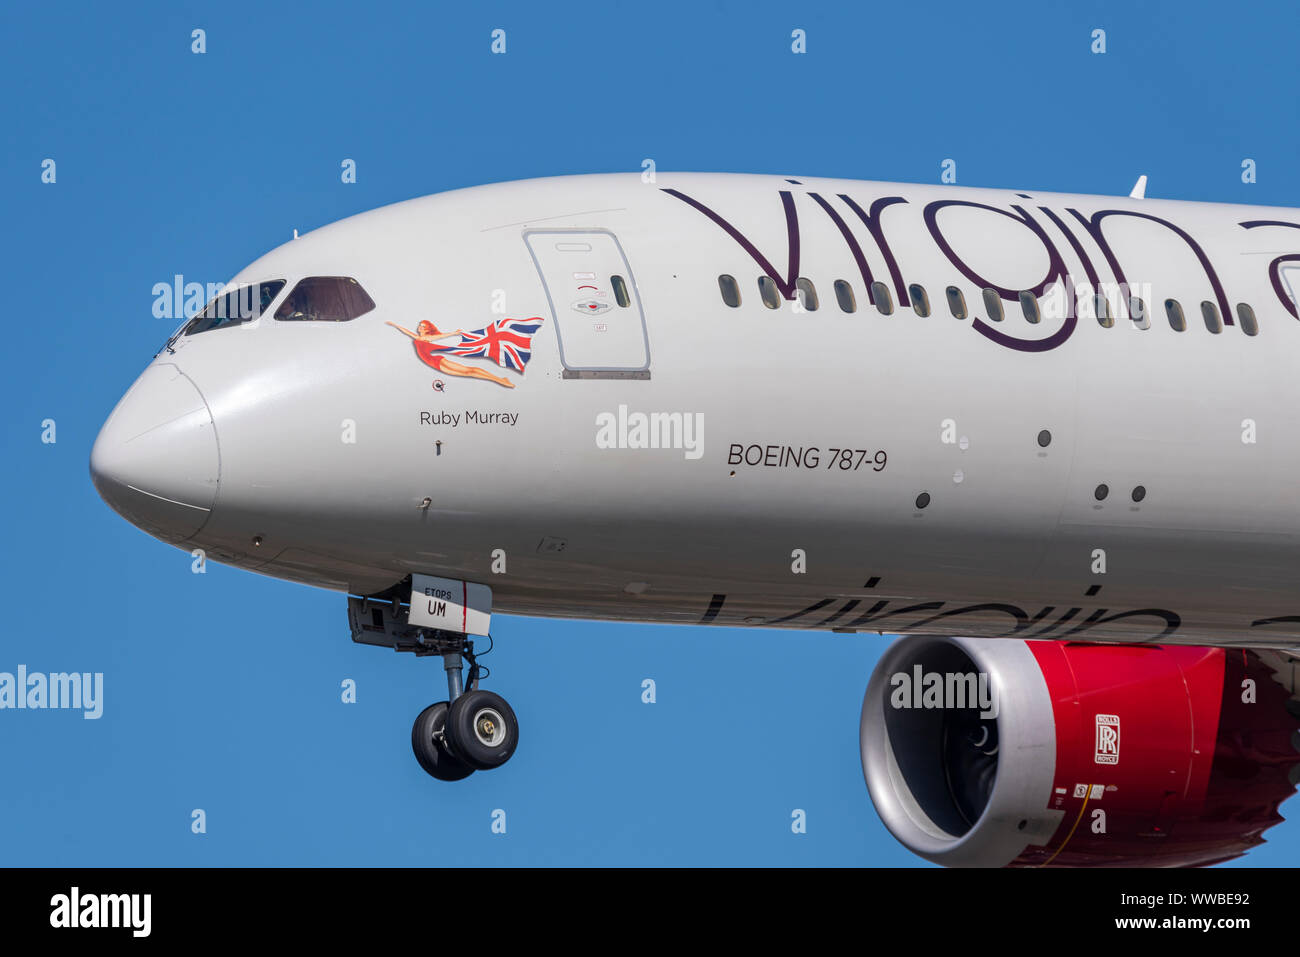 Virgin Atlantic Airways Boeing 787 Dreamliner G-VYUM named Ruby Murray jet airliner plane landing at London Heathrow Airport in Hounslow, London, UK Stock Photo